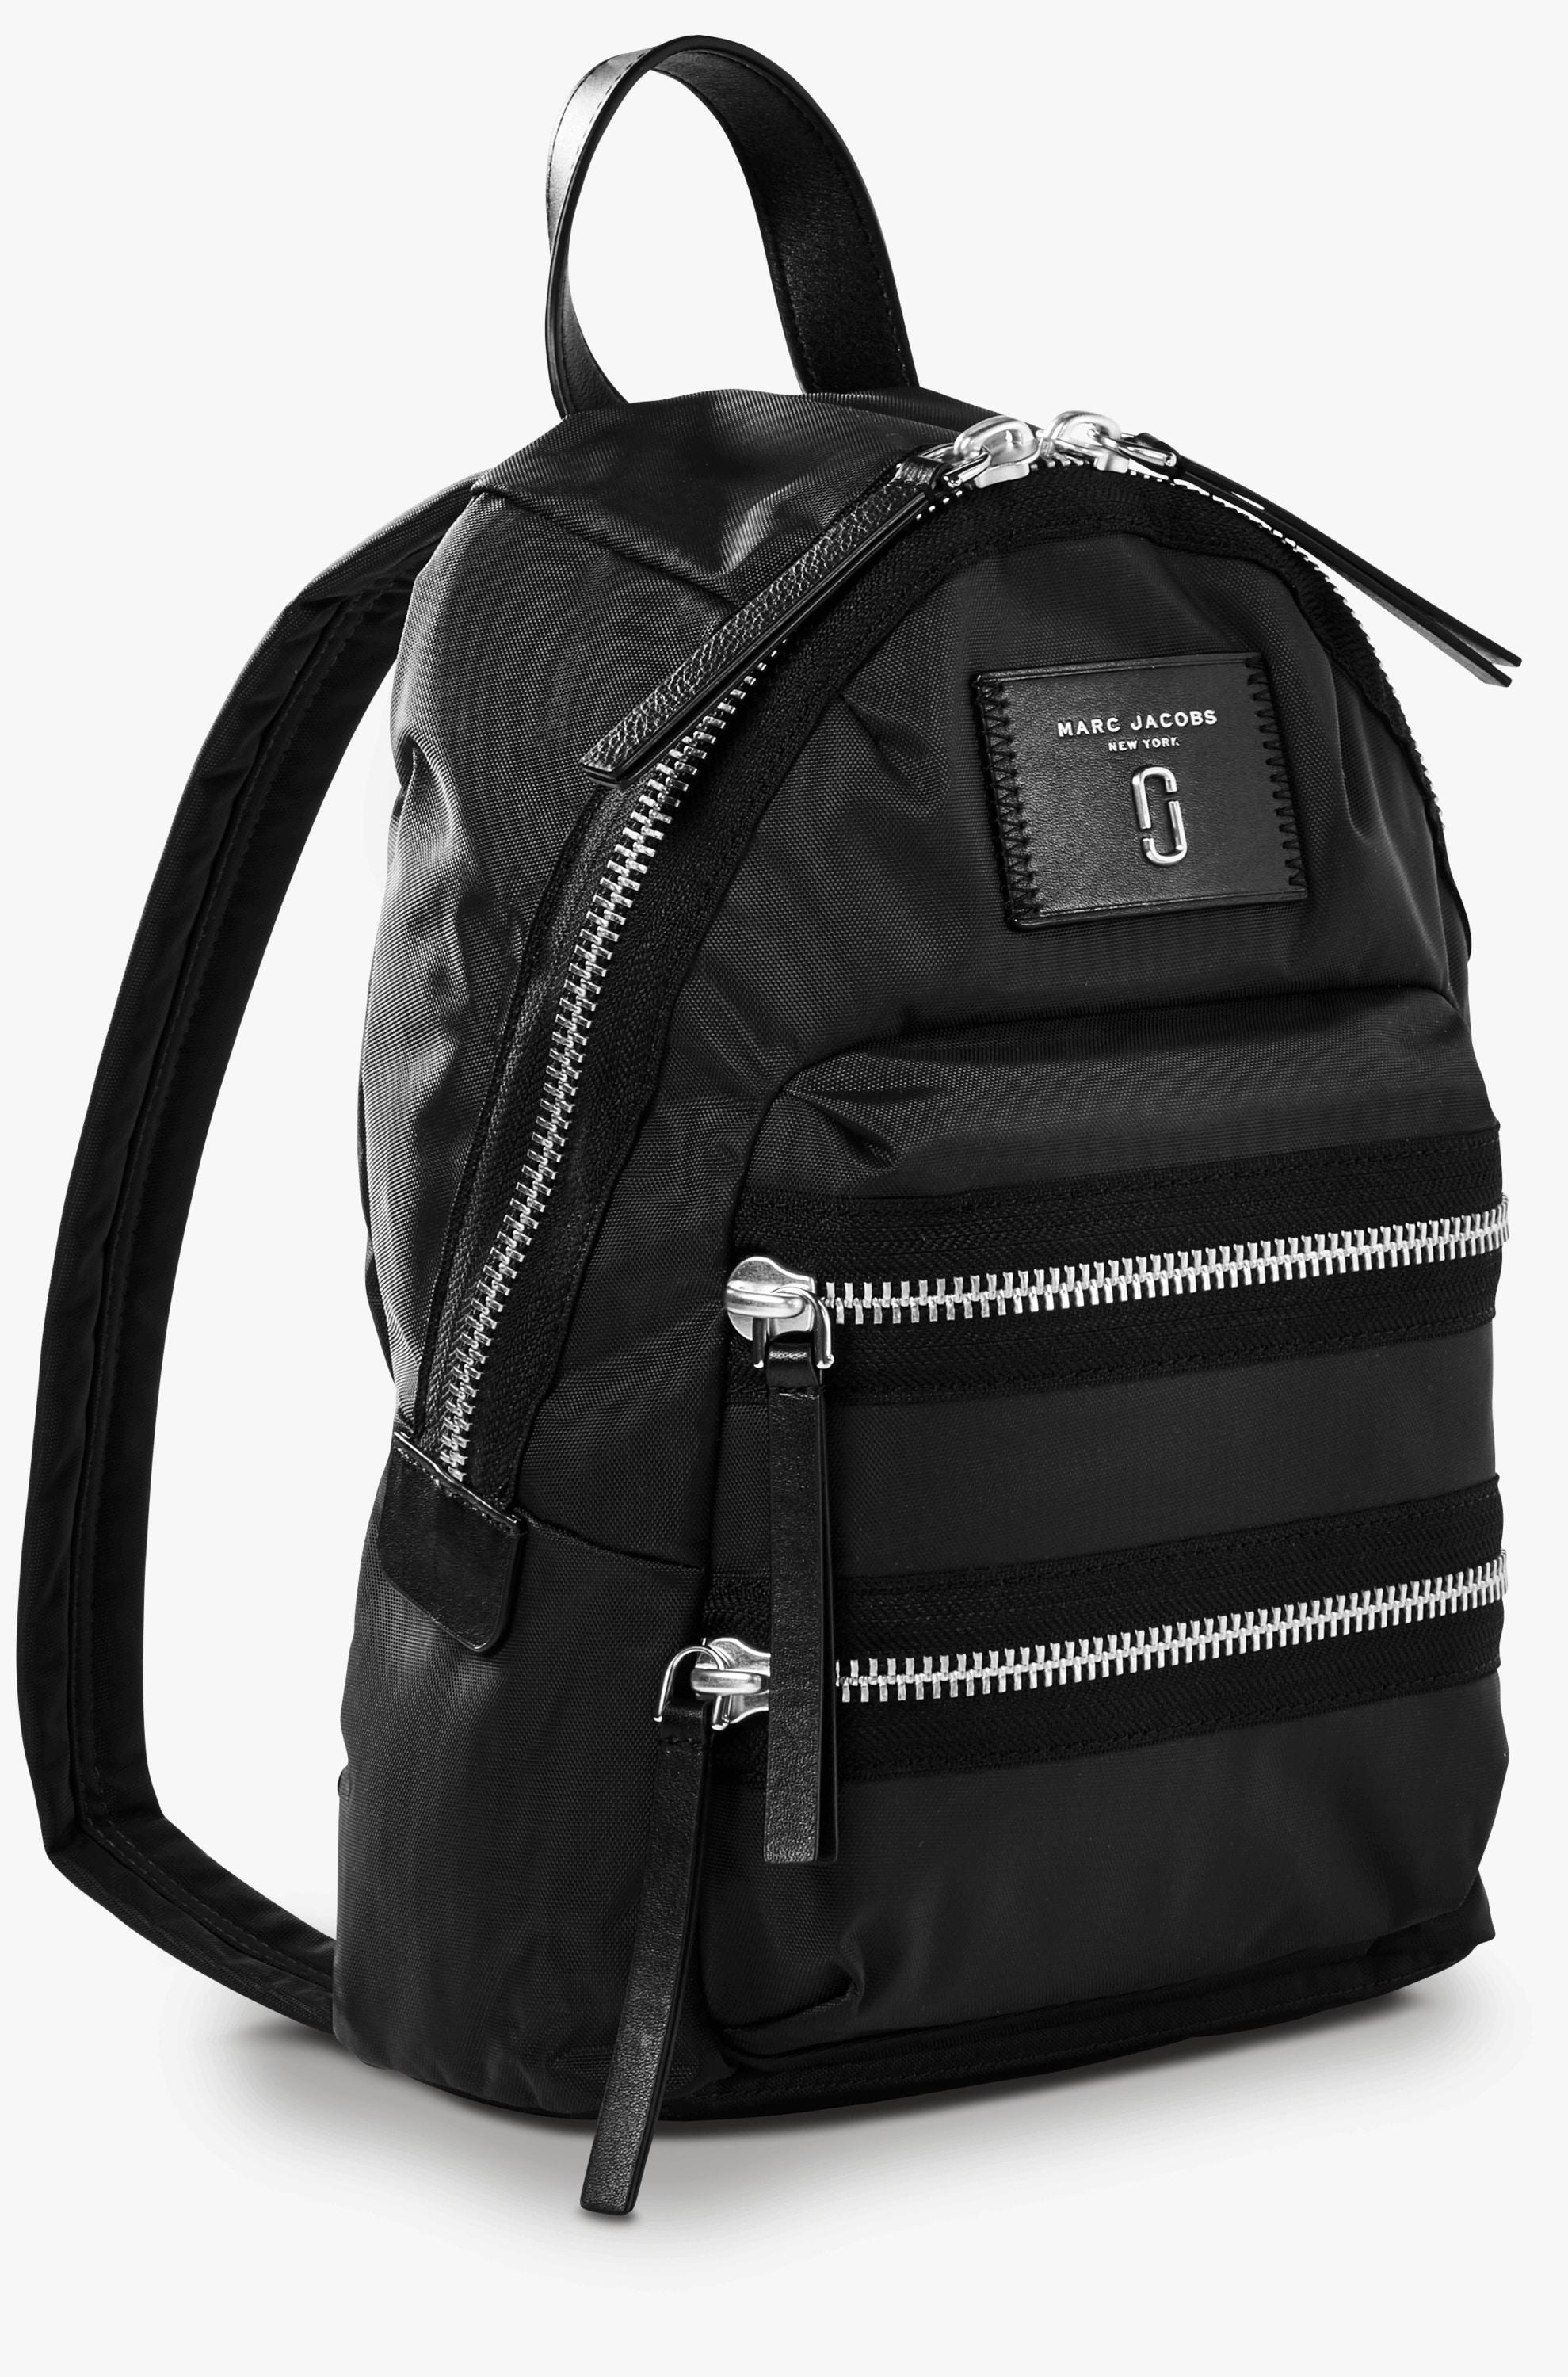 Marc Jacobs Synthetic Nylon Biker Mini Backpack in Black - Lyst